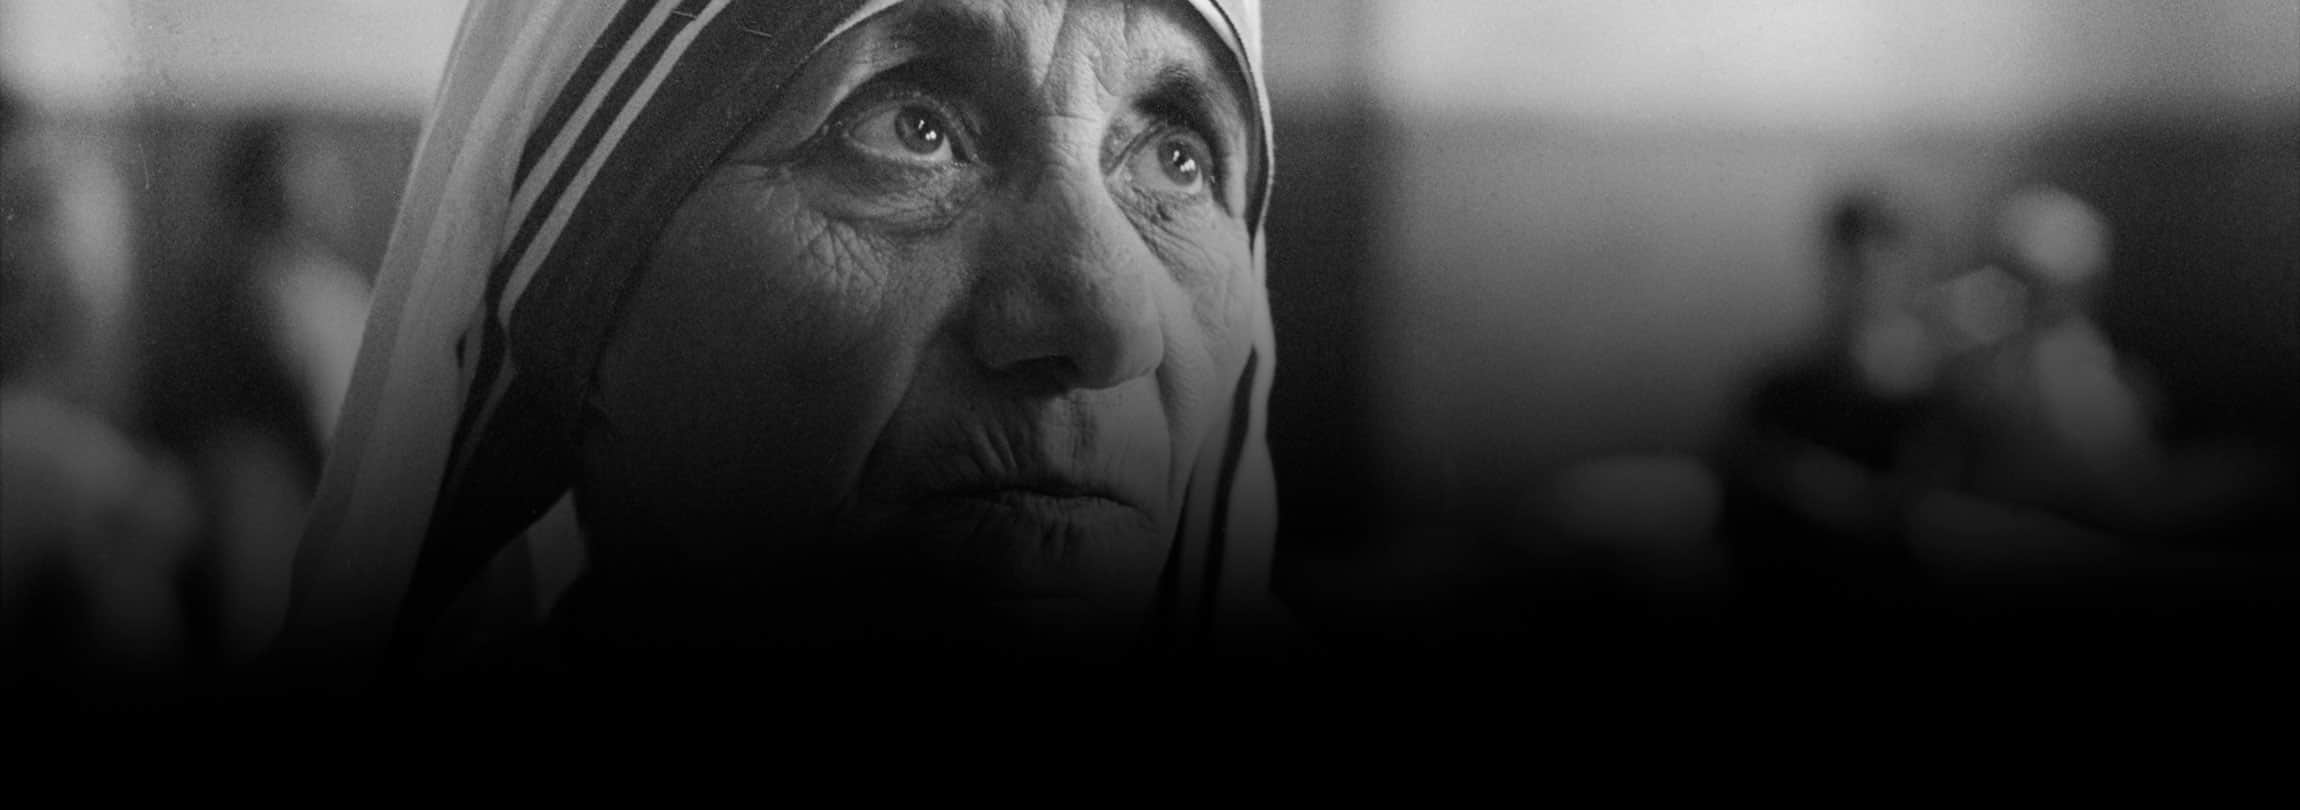 De onde vêm as críticas a Madre Teresa de Calcutá?